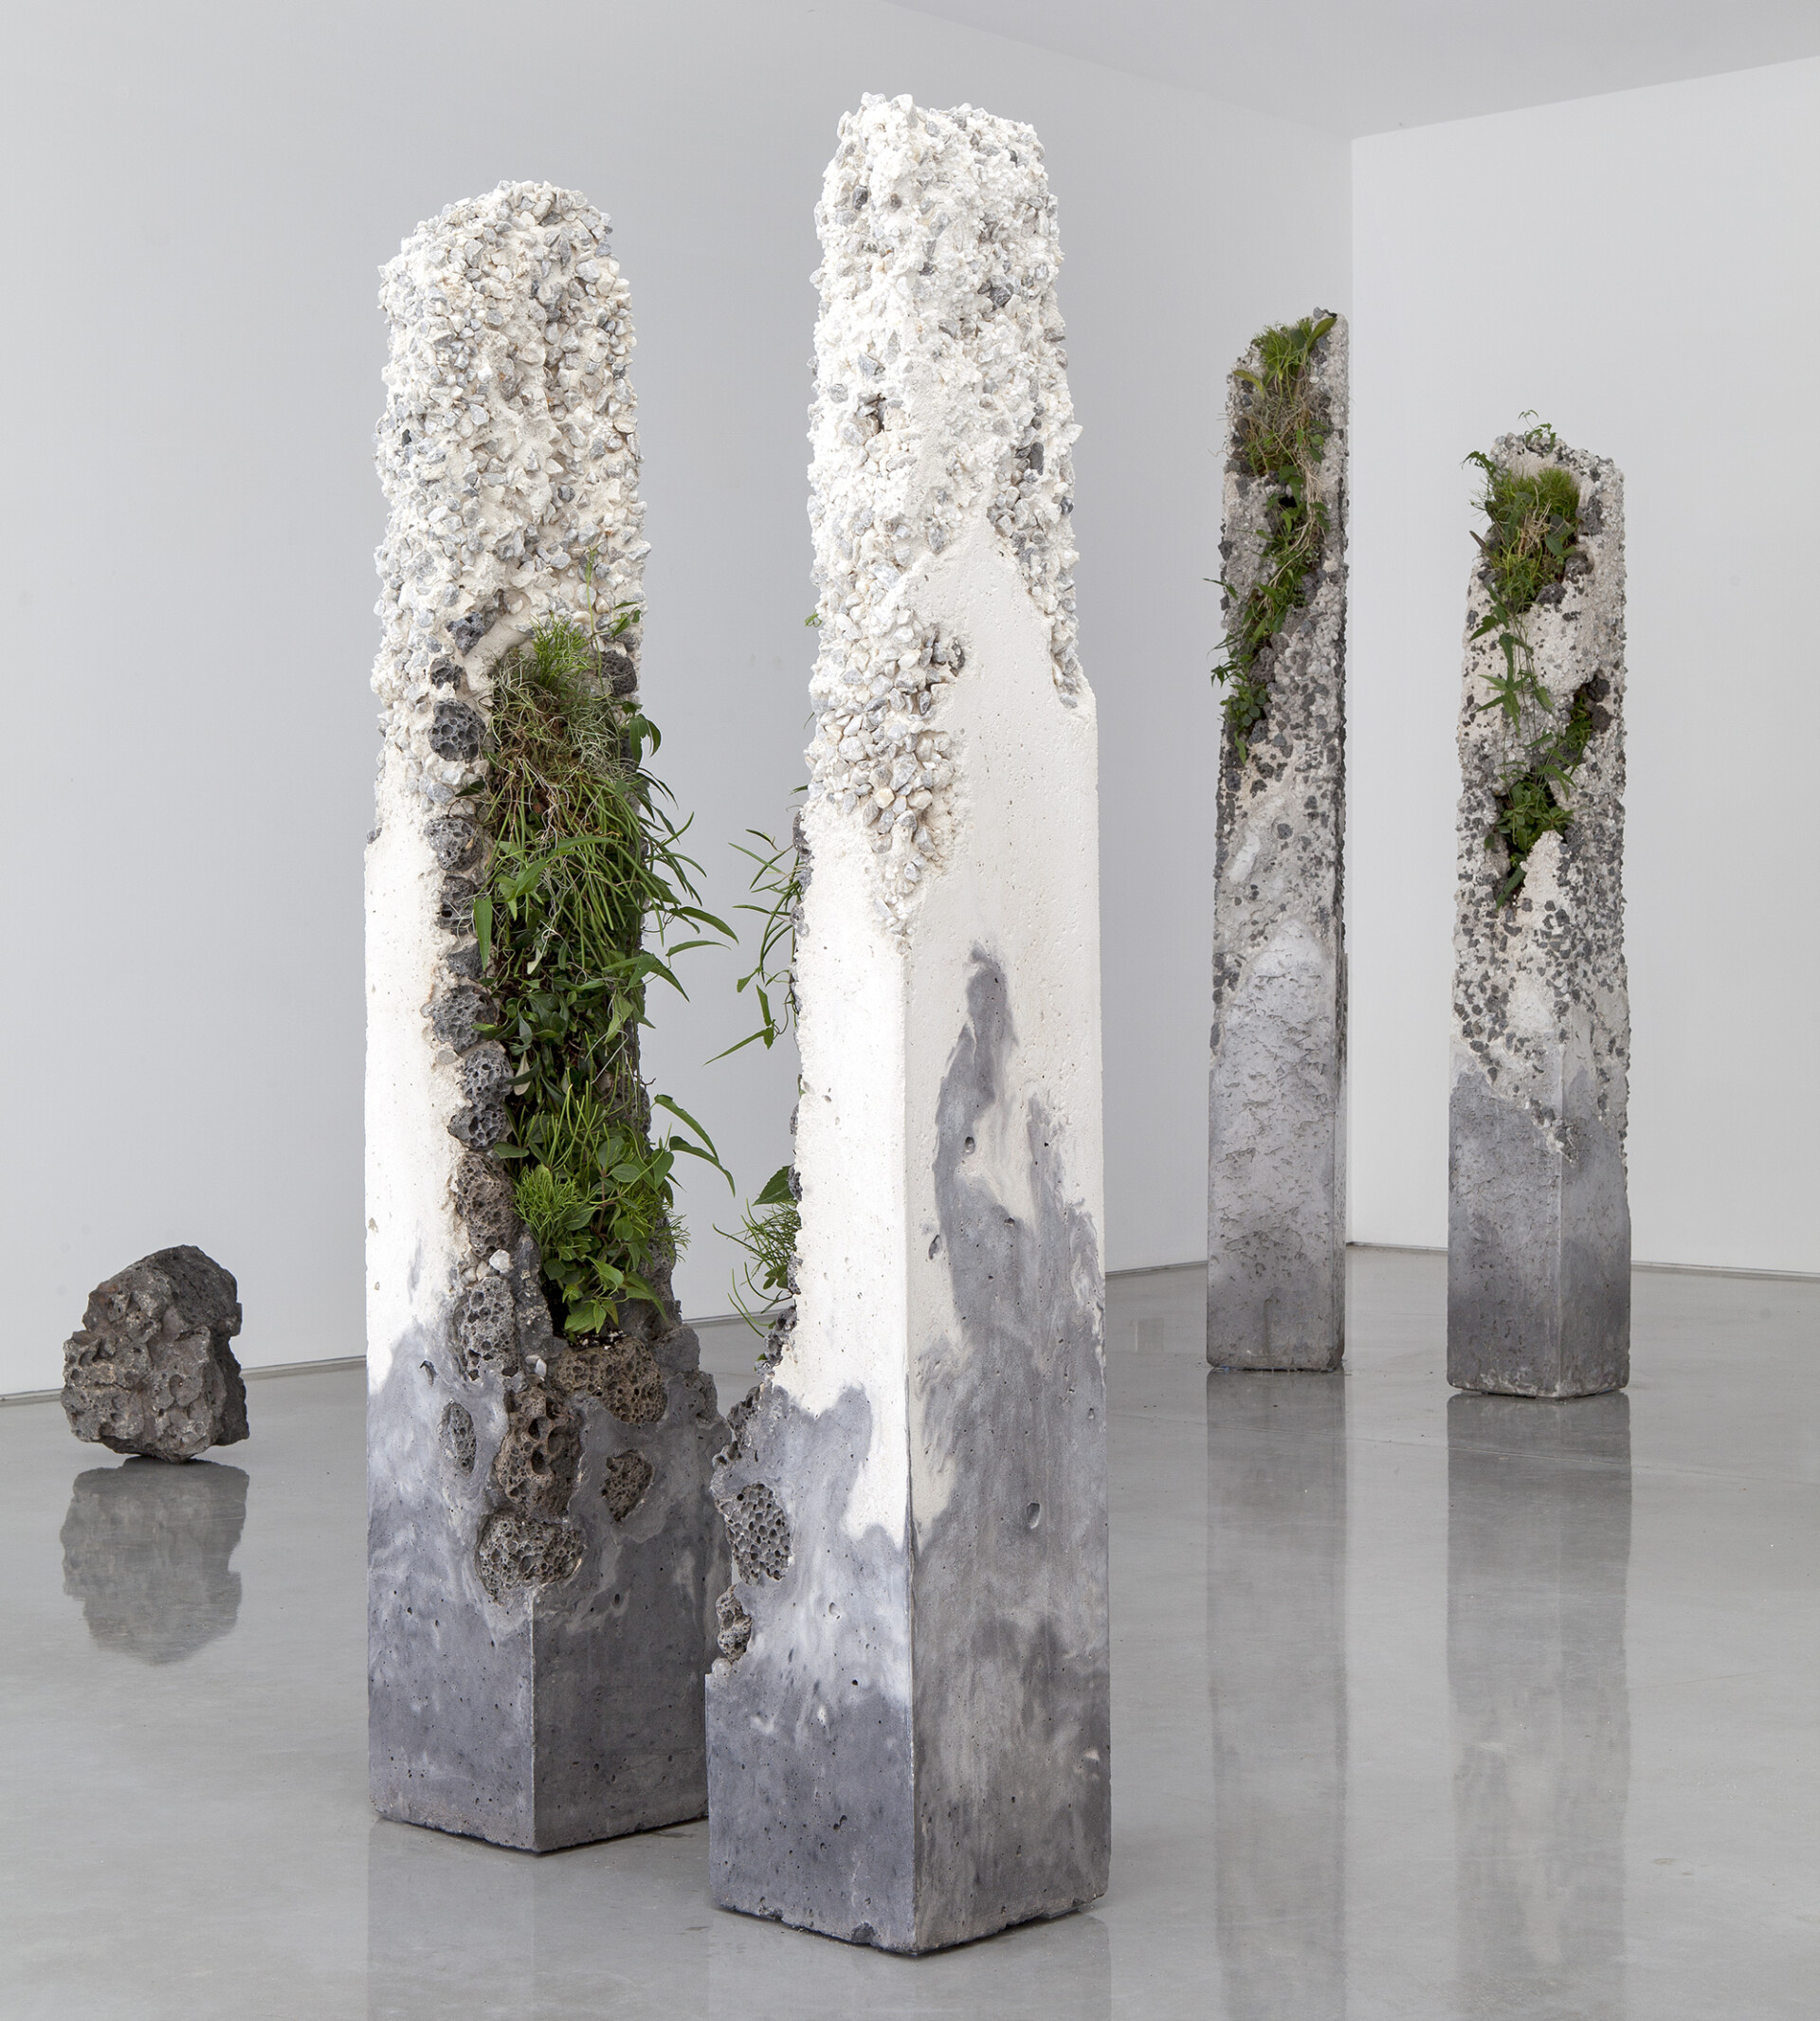 Jamie North Creates Living Sculptures with Native Plants Terraforming